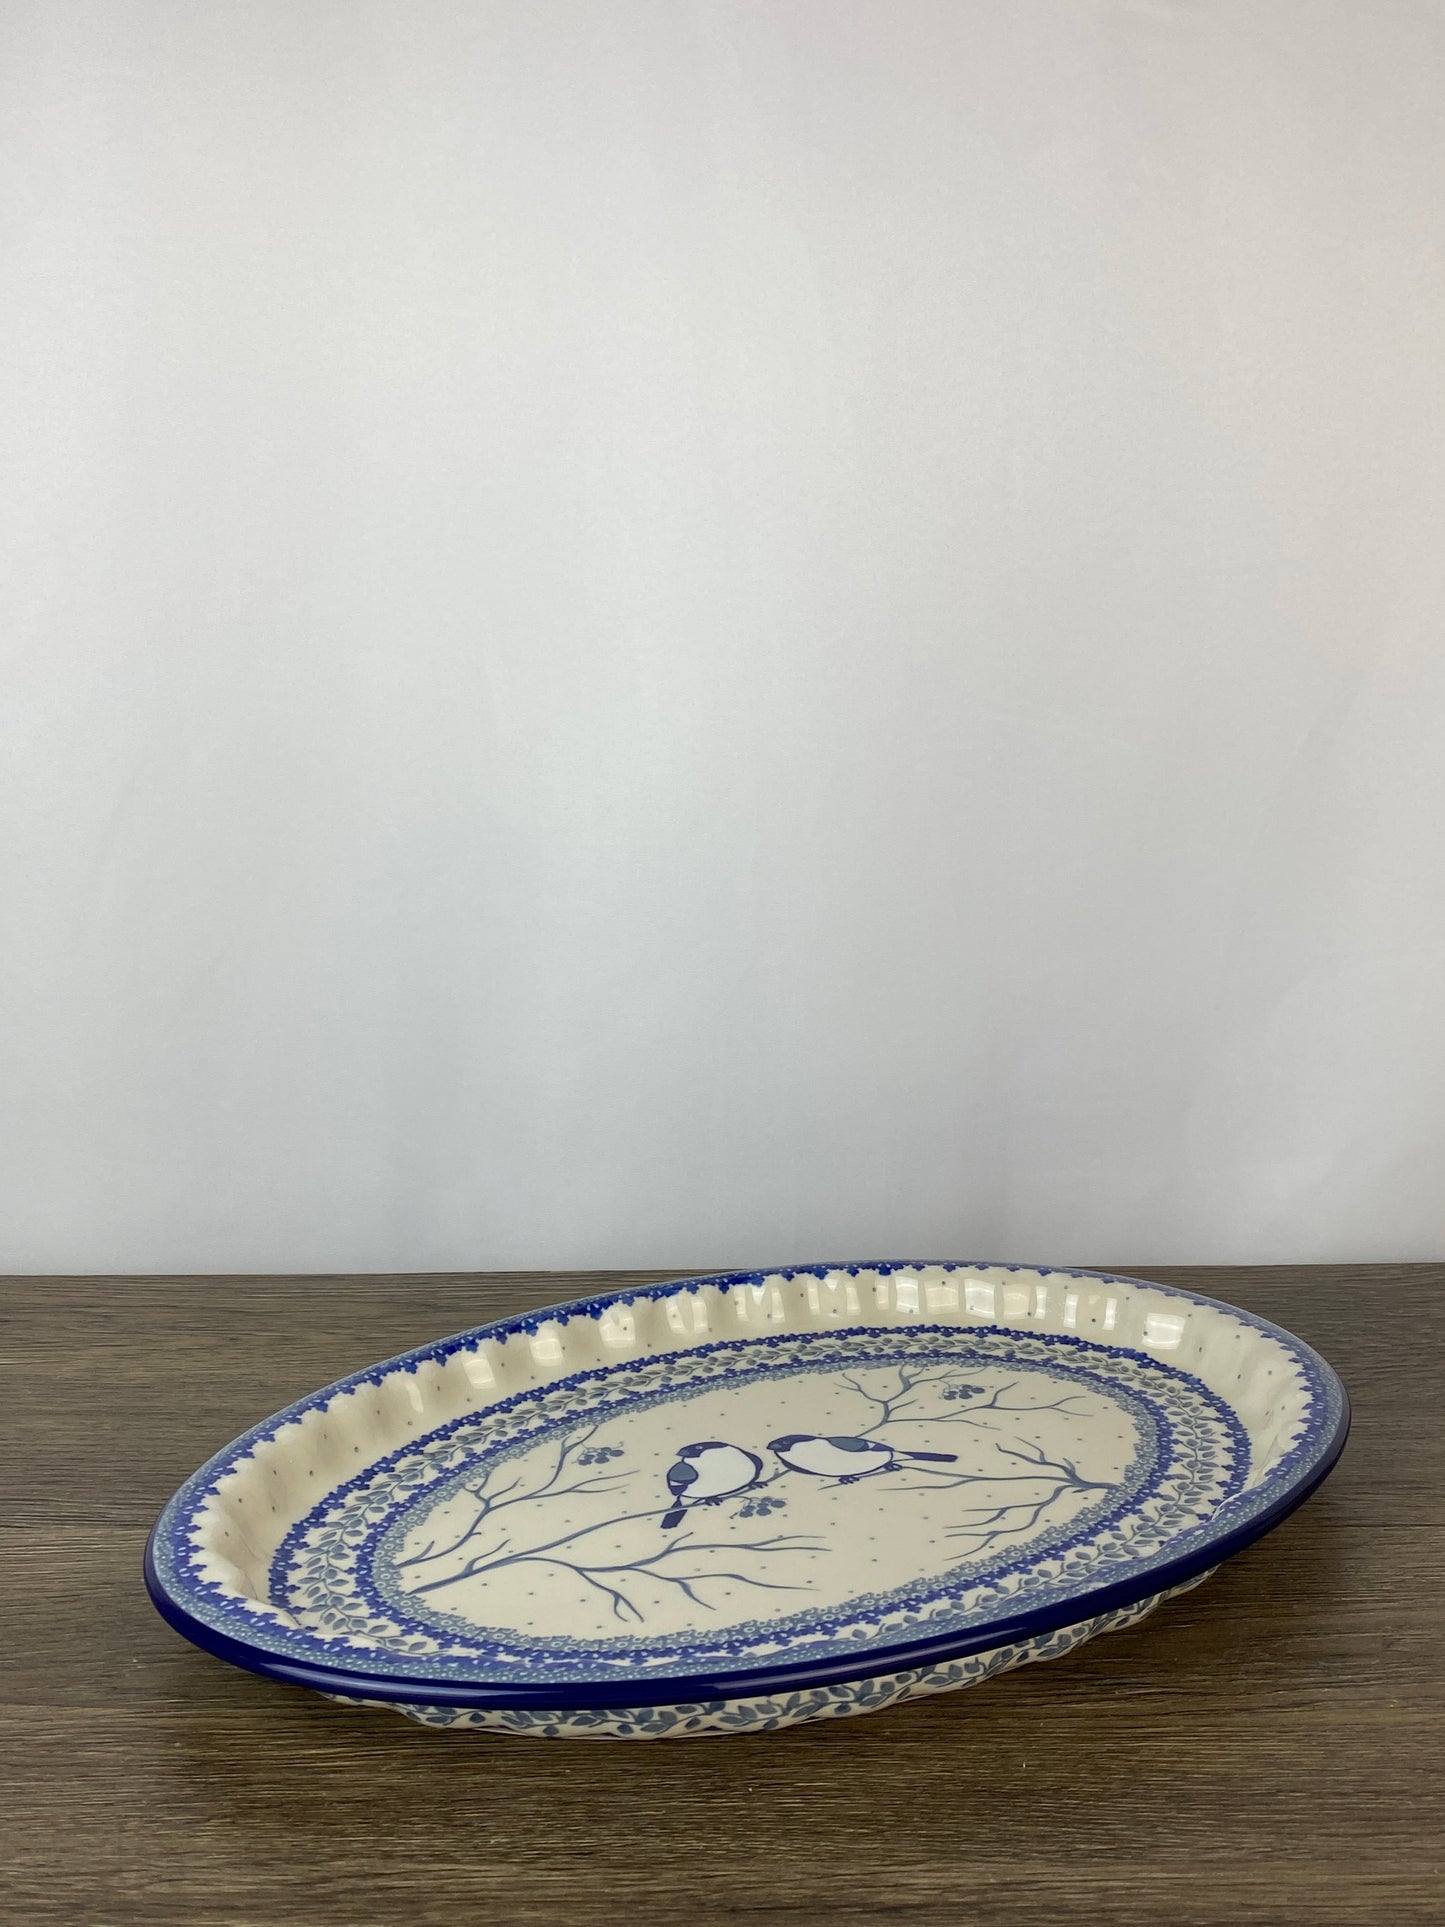 Unikat Oval Platter - Shape 614 - Pattern U4830